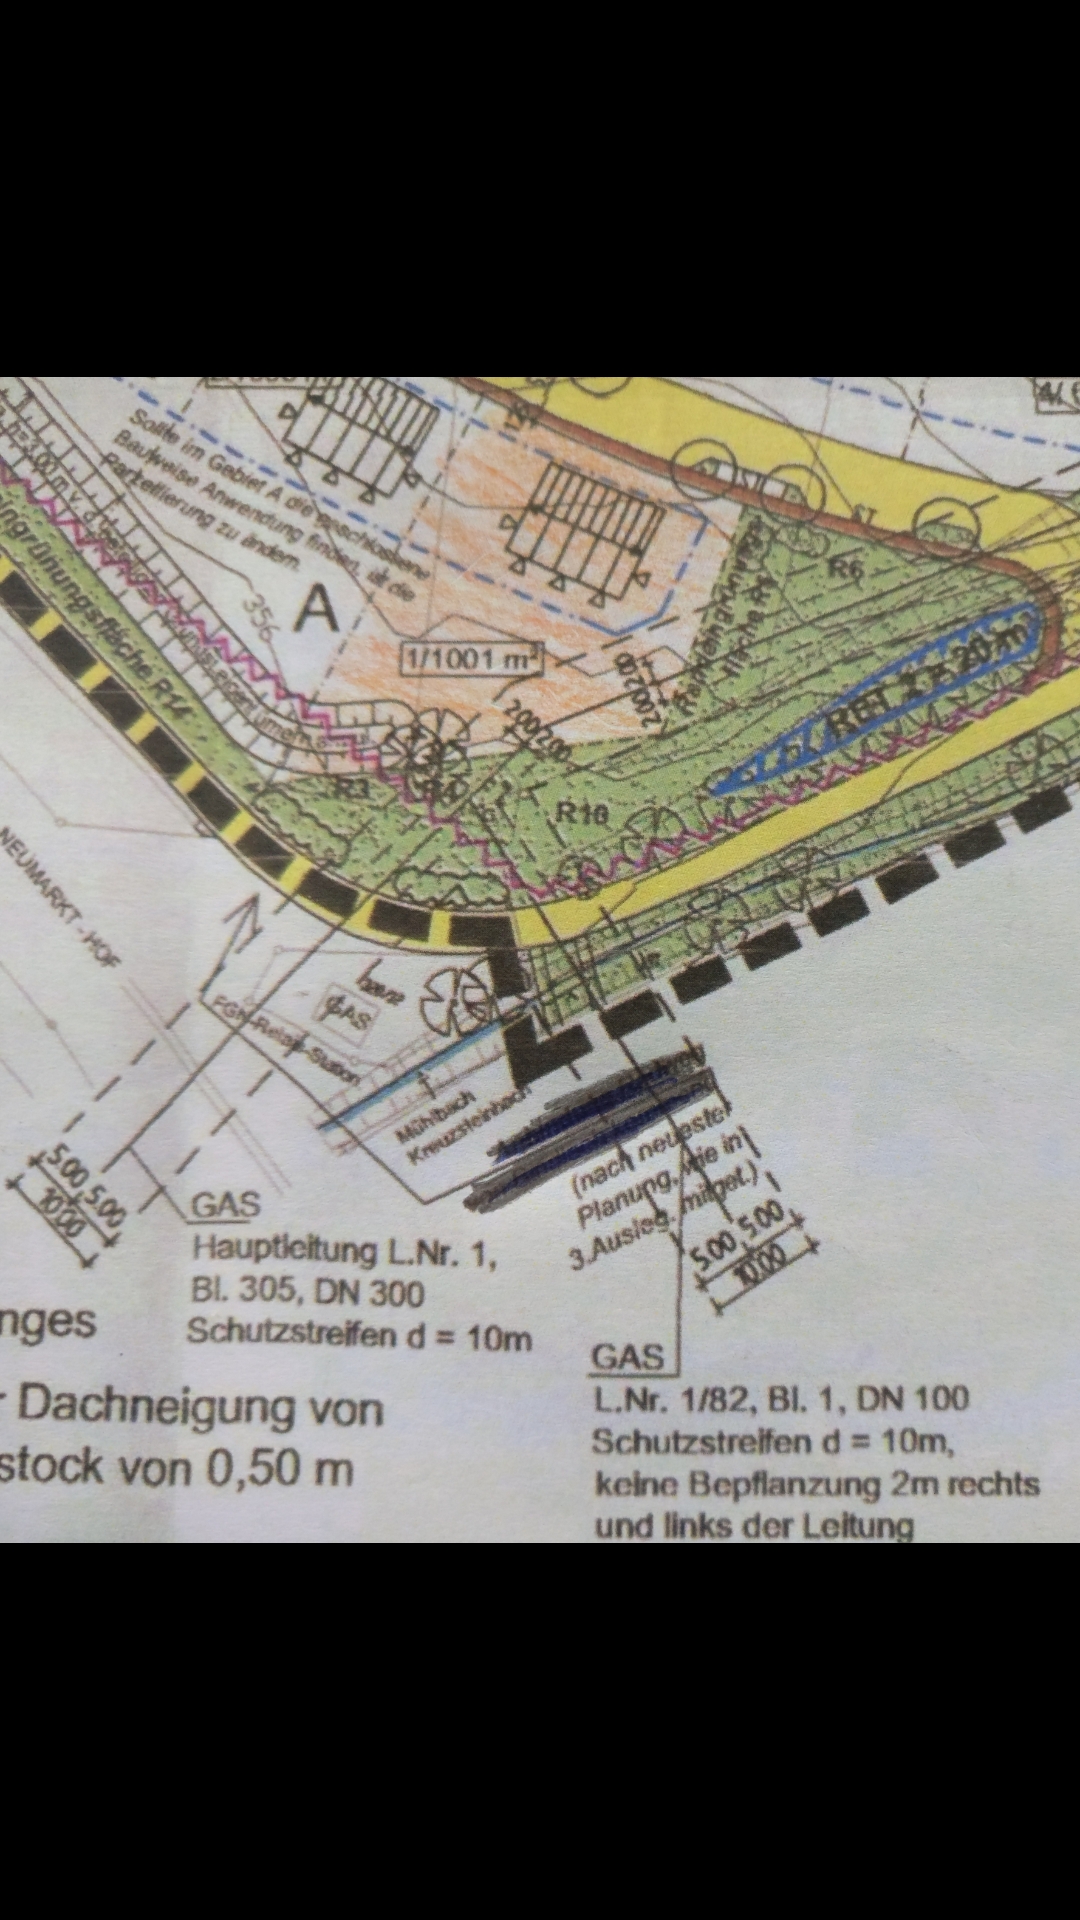 gas-hauptleitung-schutzstreifen-kreuzt-grundstueck-250643-1.jpg